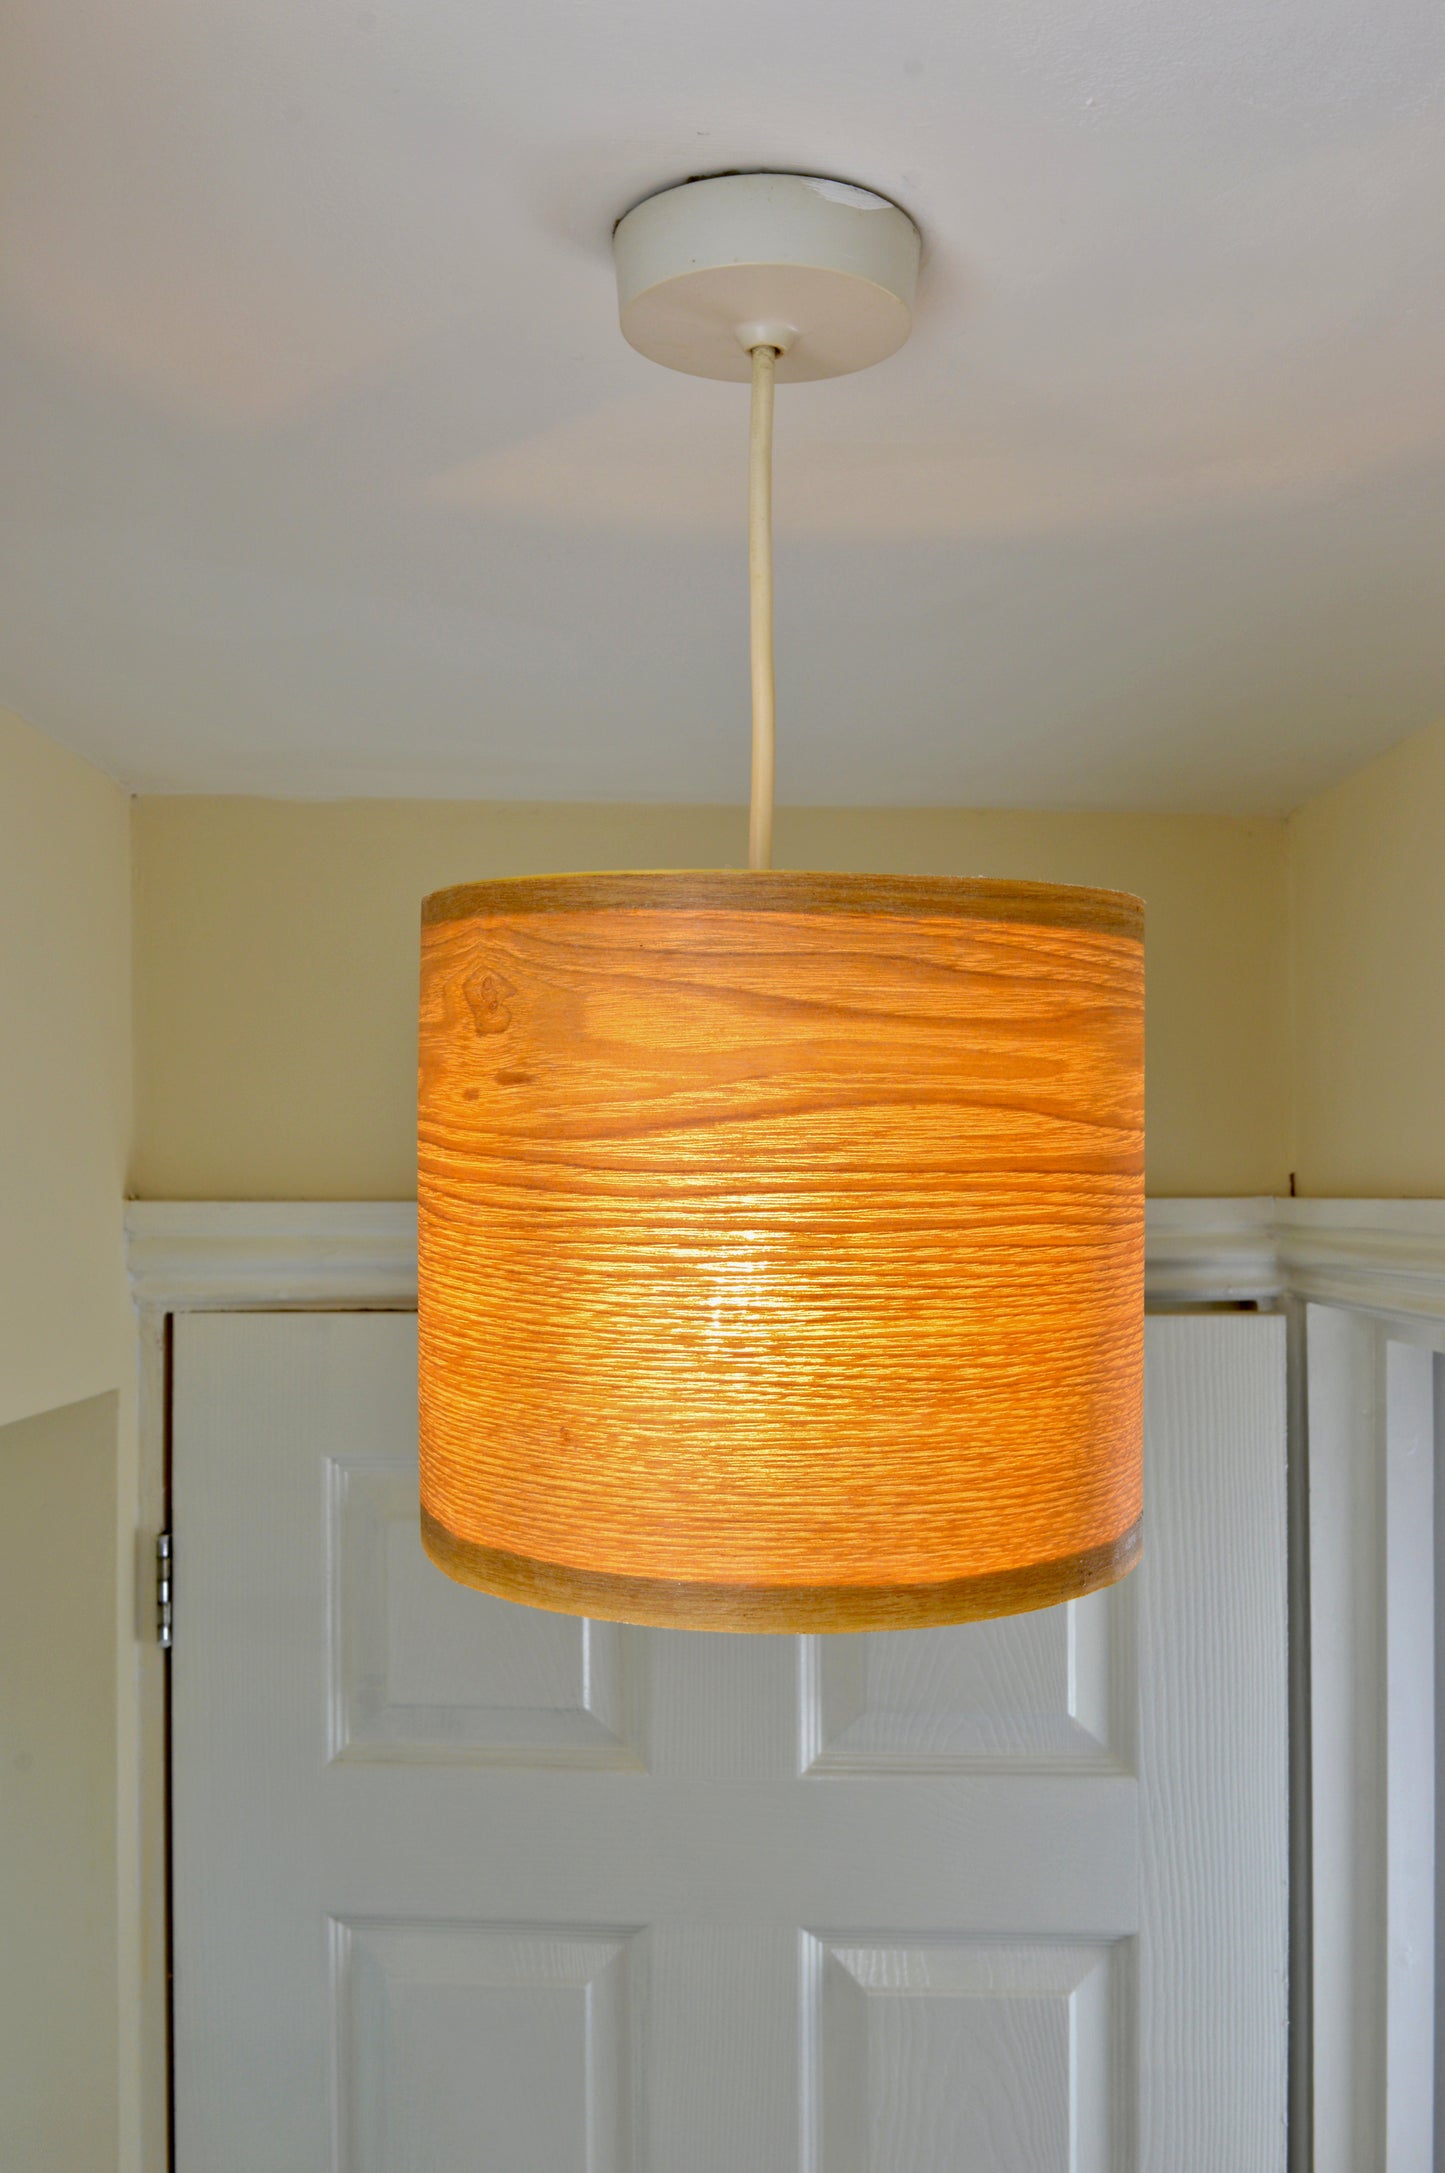 20cm Ash Oak Wood veneer ceiling pendant light shade